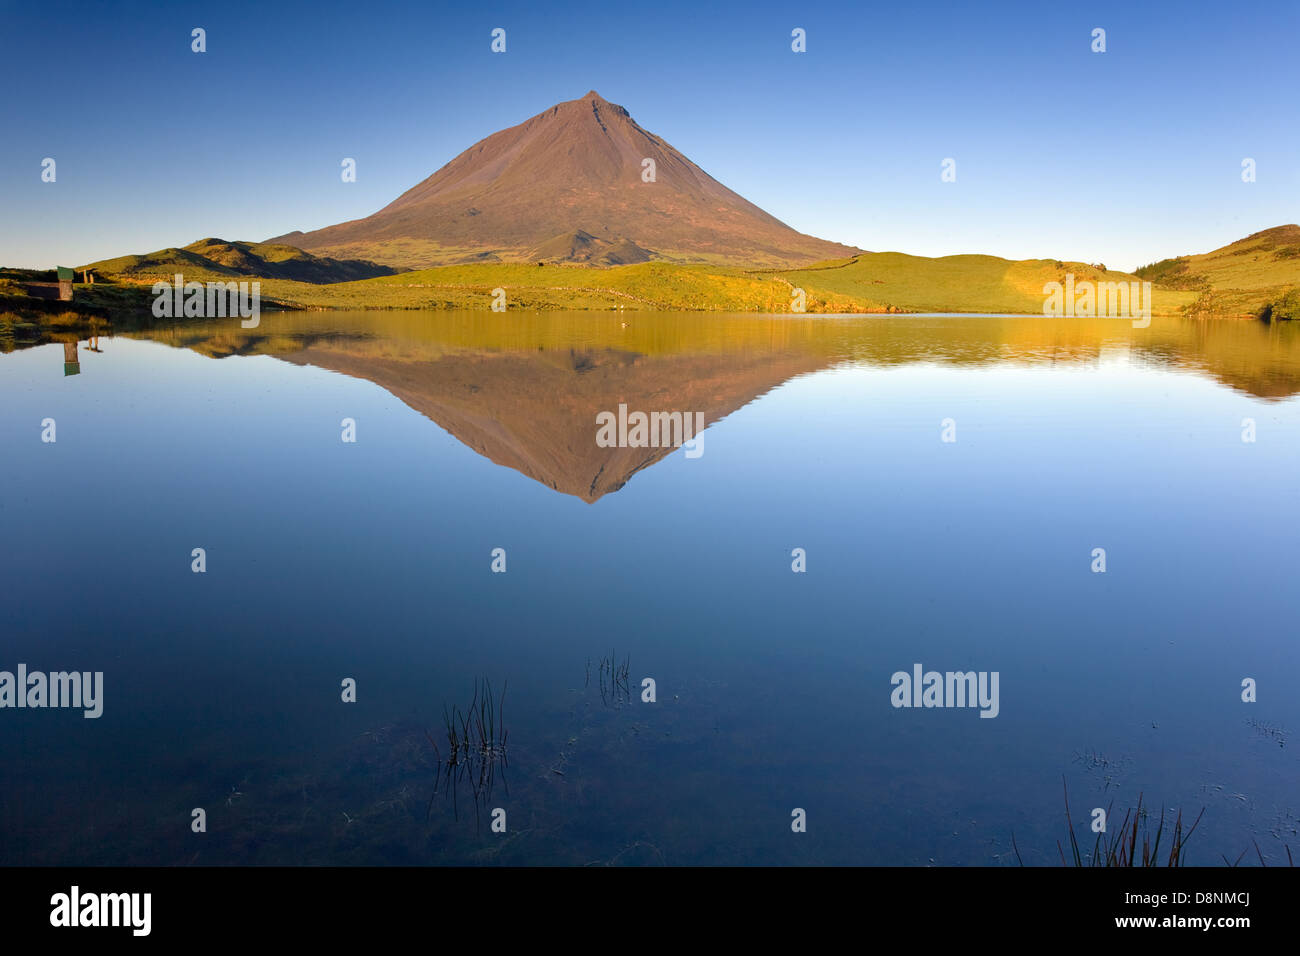 Berg Pico spiegelt sich in Captain Lagune bei Sonnenaufgang - Insel Pico - Azoren Stockfoto